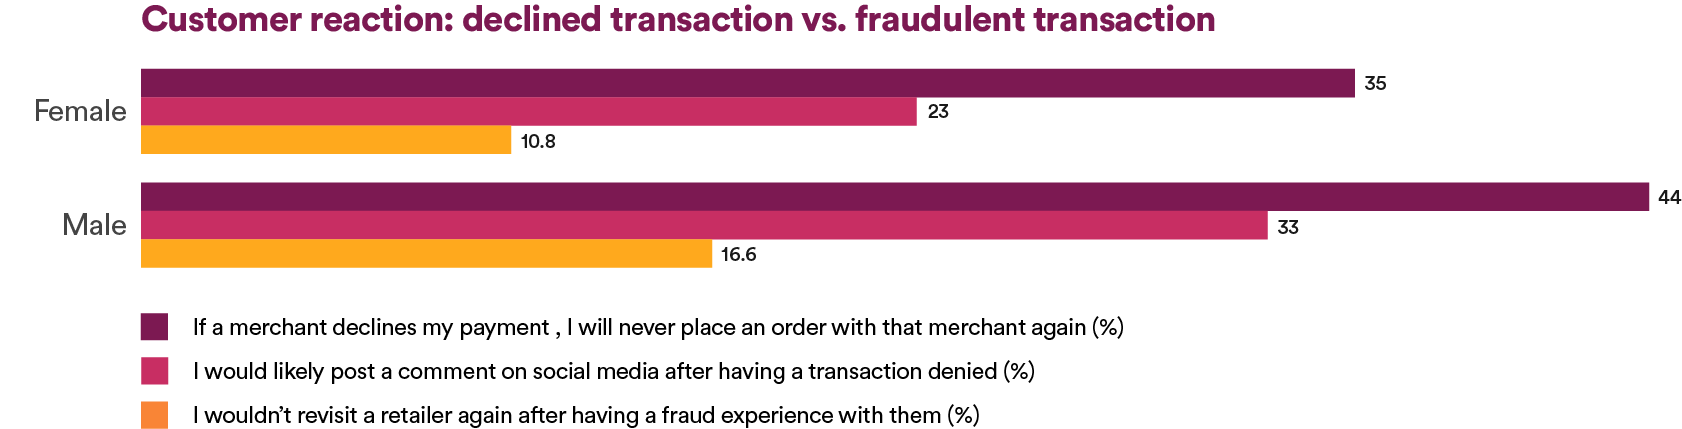 Customer reaction: declined transaction vs. fraudulent transaction